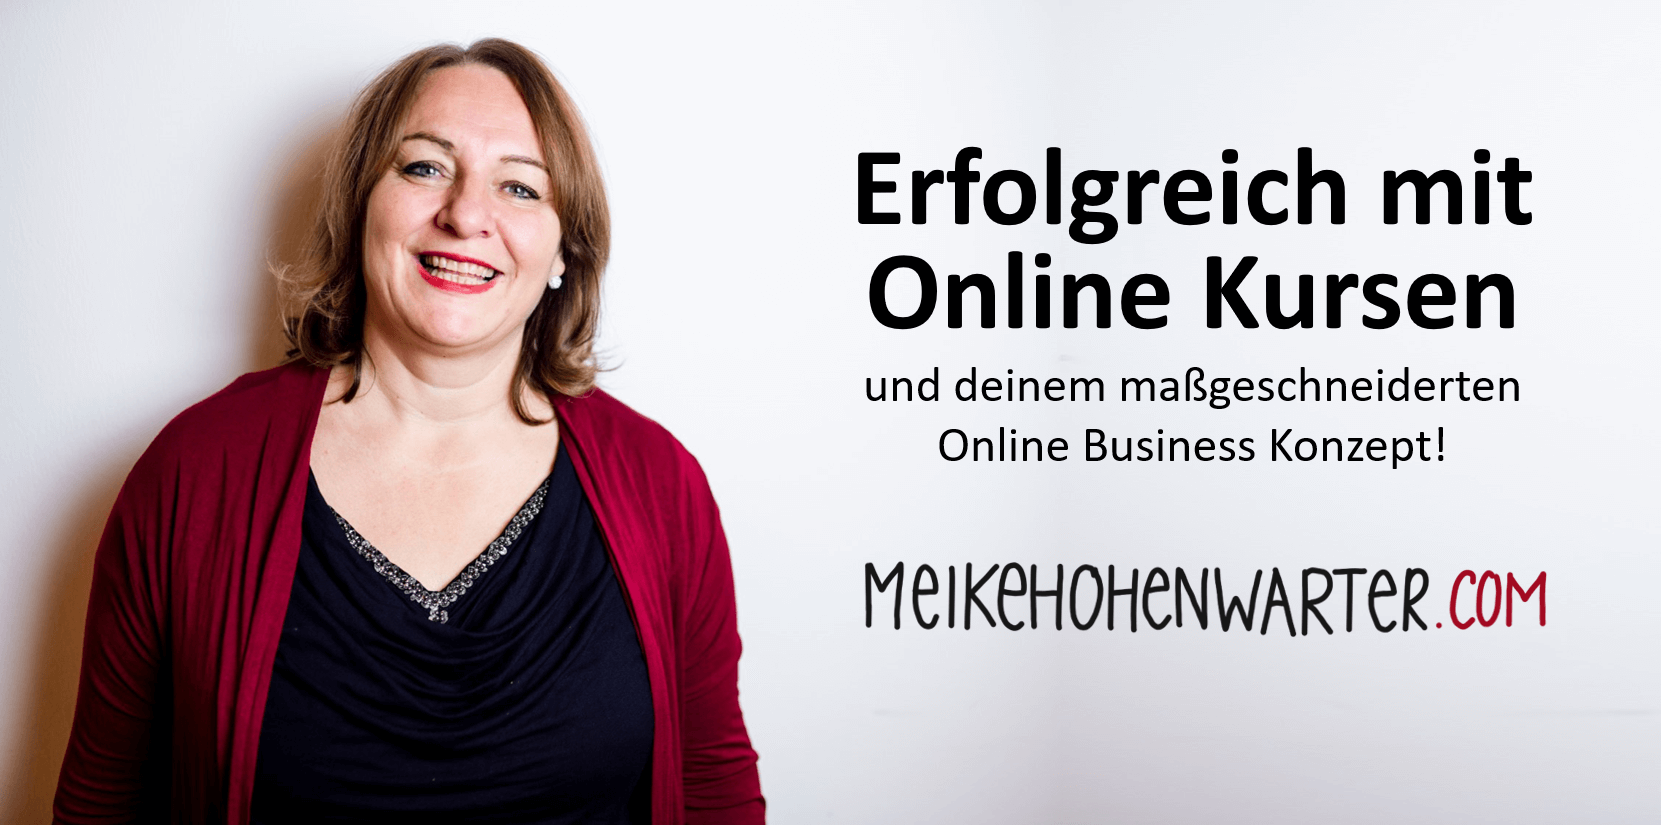 (c) Meikehohenwarter.com